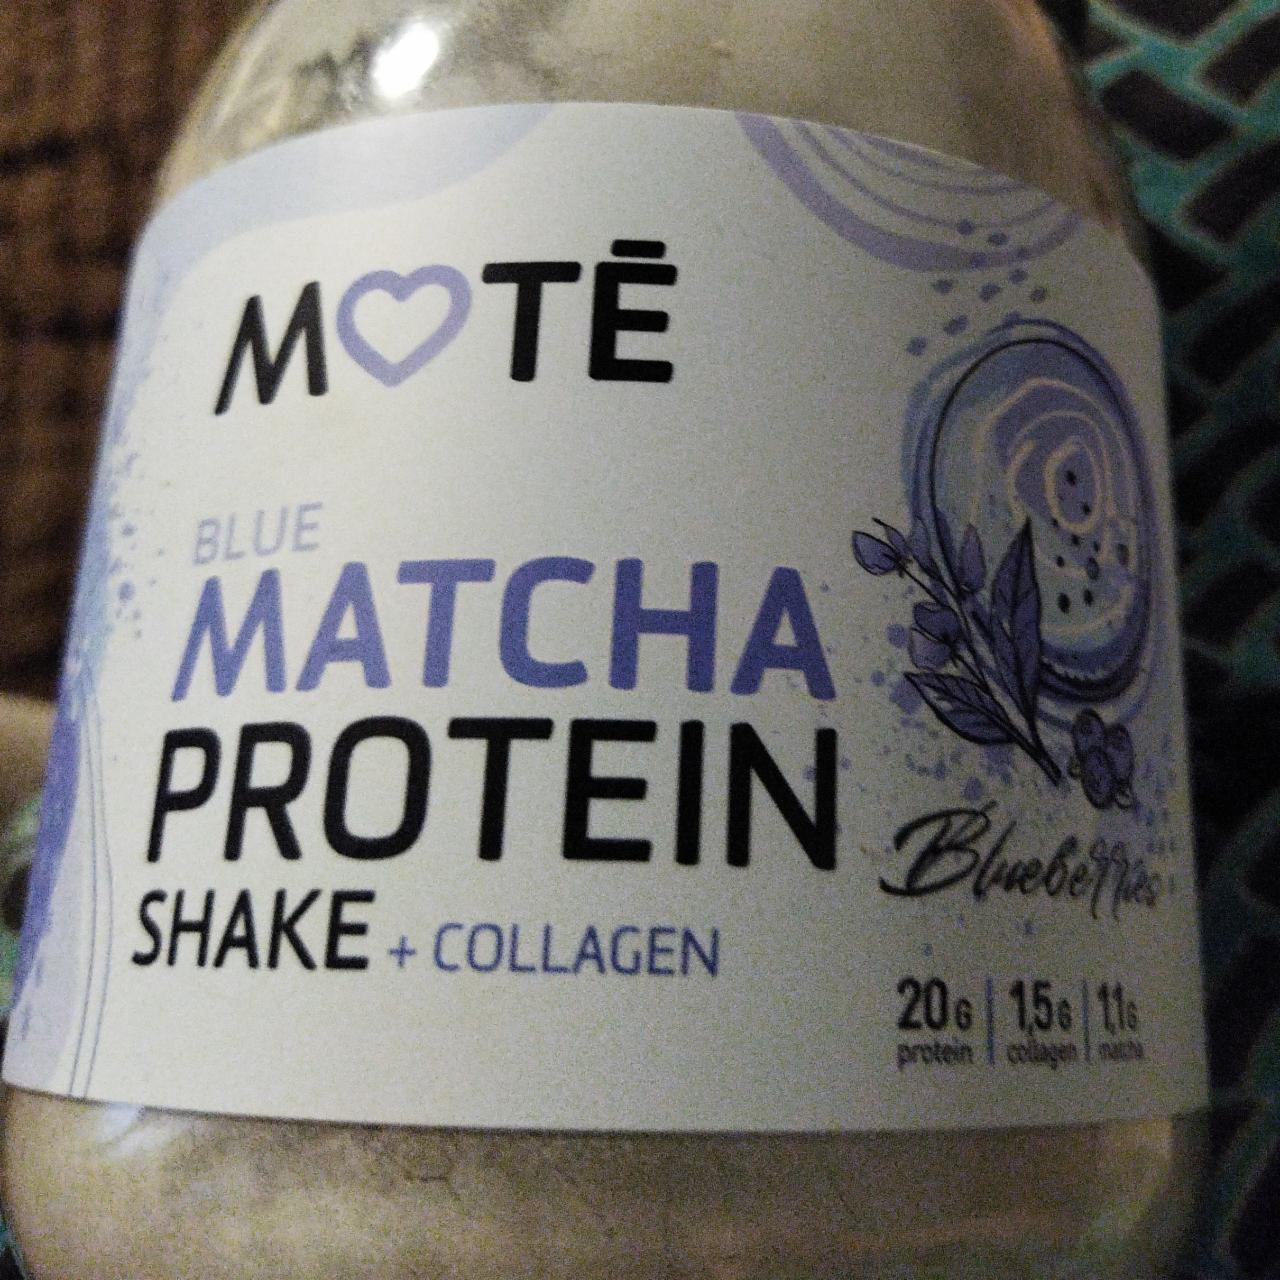 Фото - Протеин с коллагеном комплексный, Голубая матча и черника Matcha protein Mote